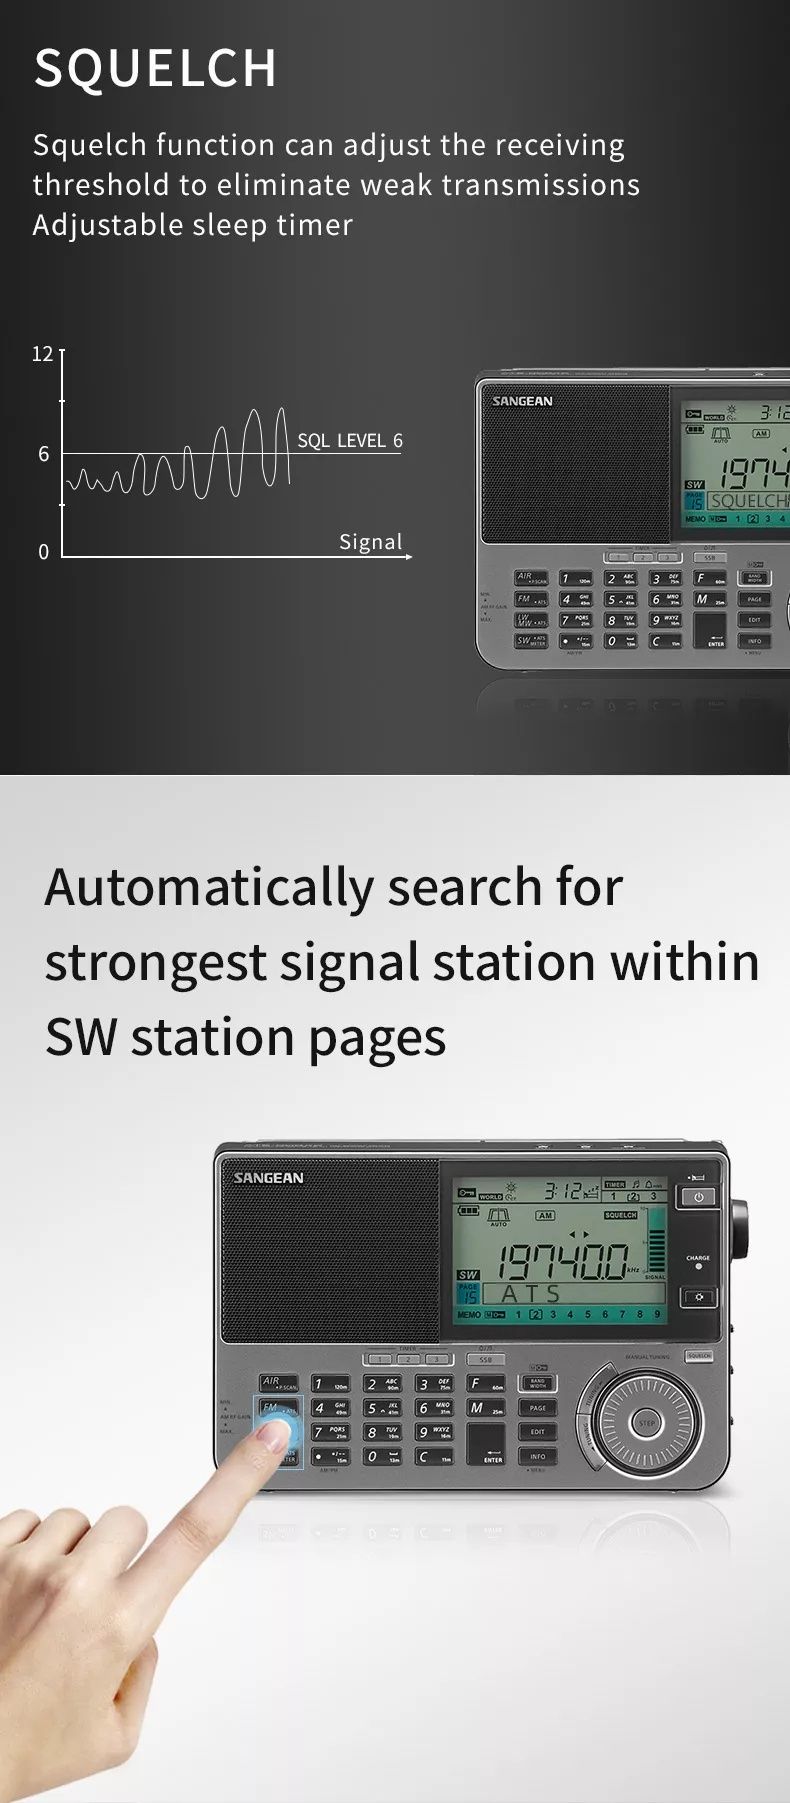 Портативный цифровой приемник Sangean ATS-909X2 LW/MW/SW/FM/AIR/SSB